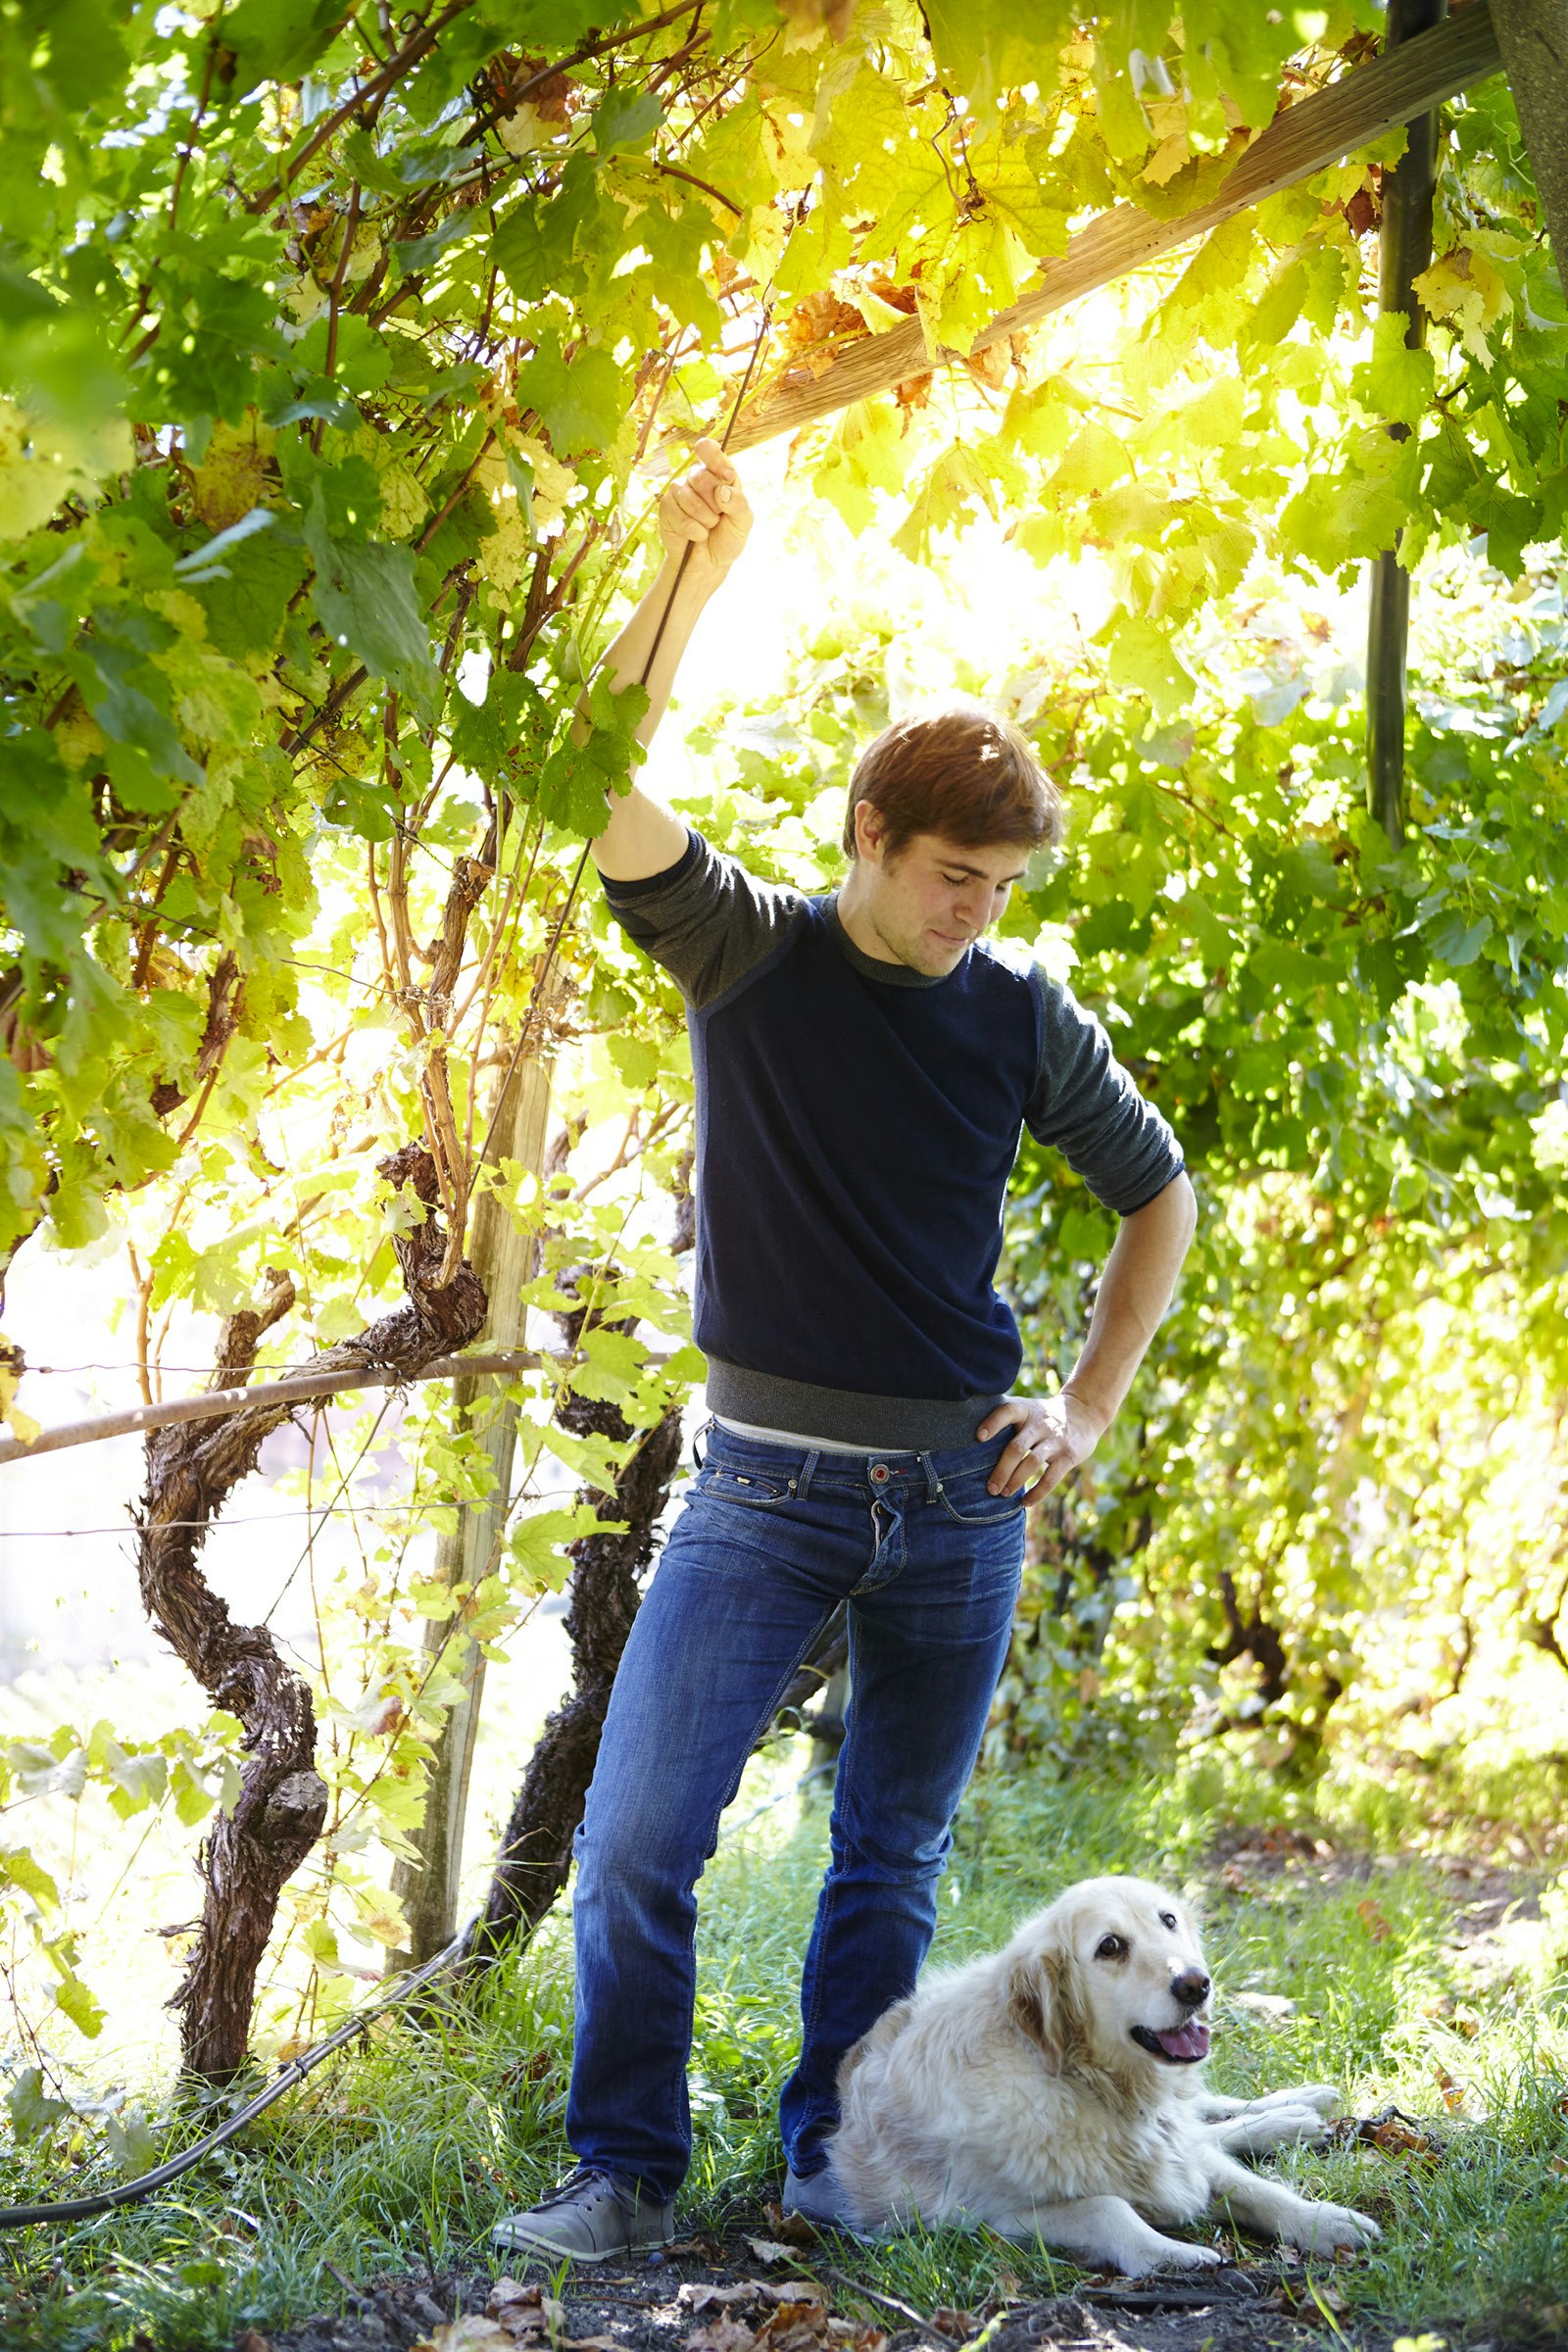 Grape vines shade winemaker Florian Gojer and golden retriever Max